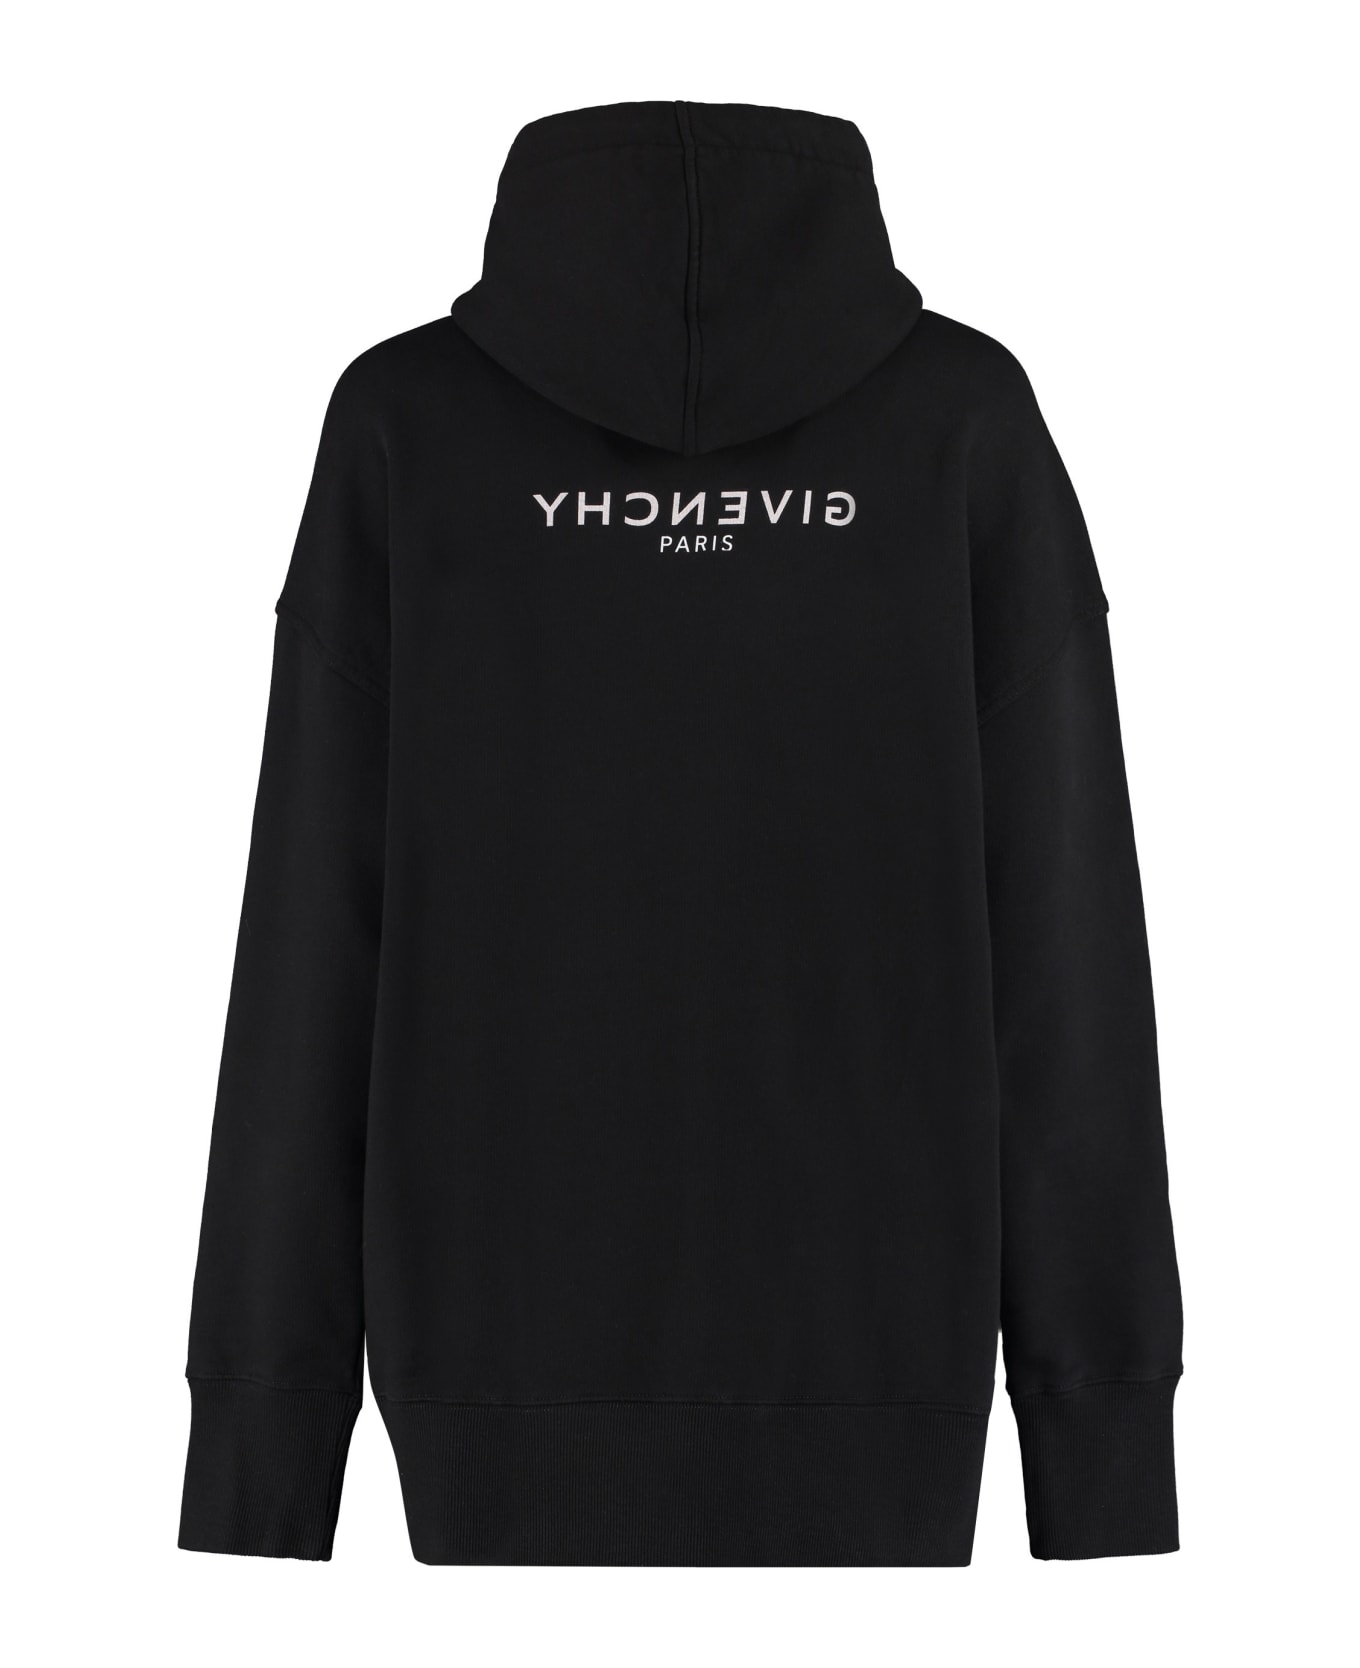 Givenchy Hooded Sweatshirt - NERO